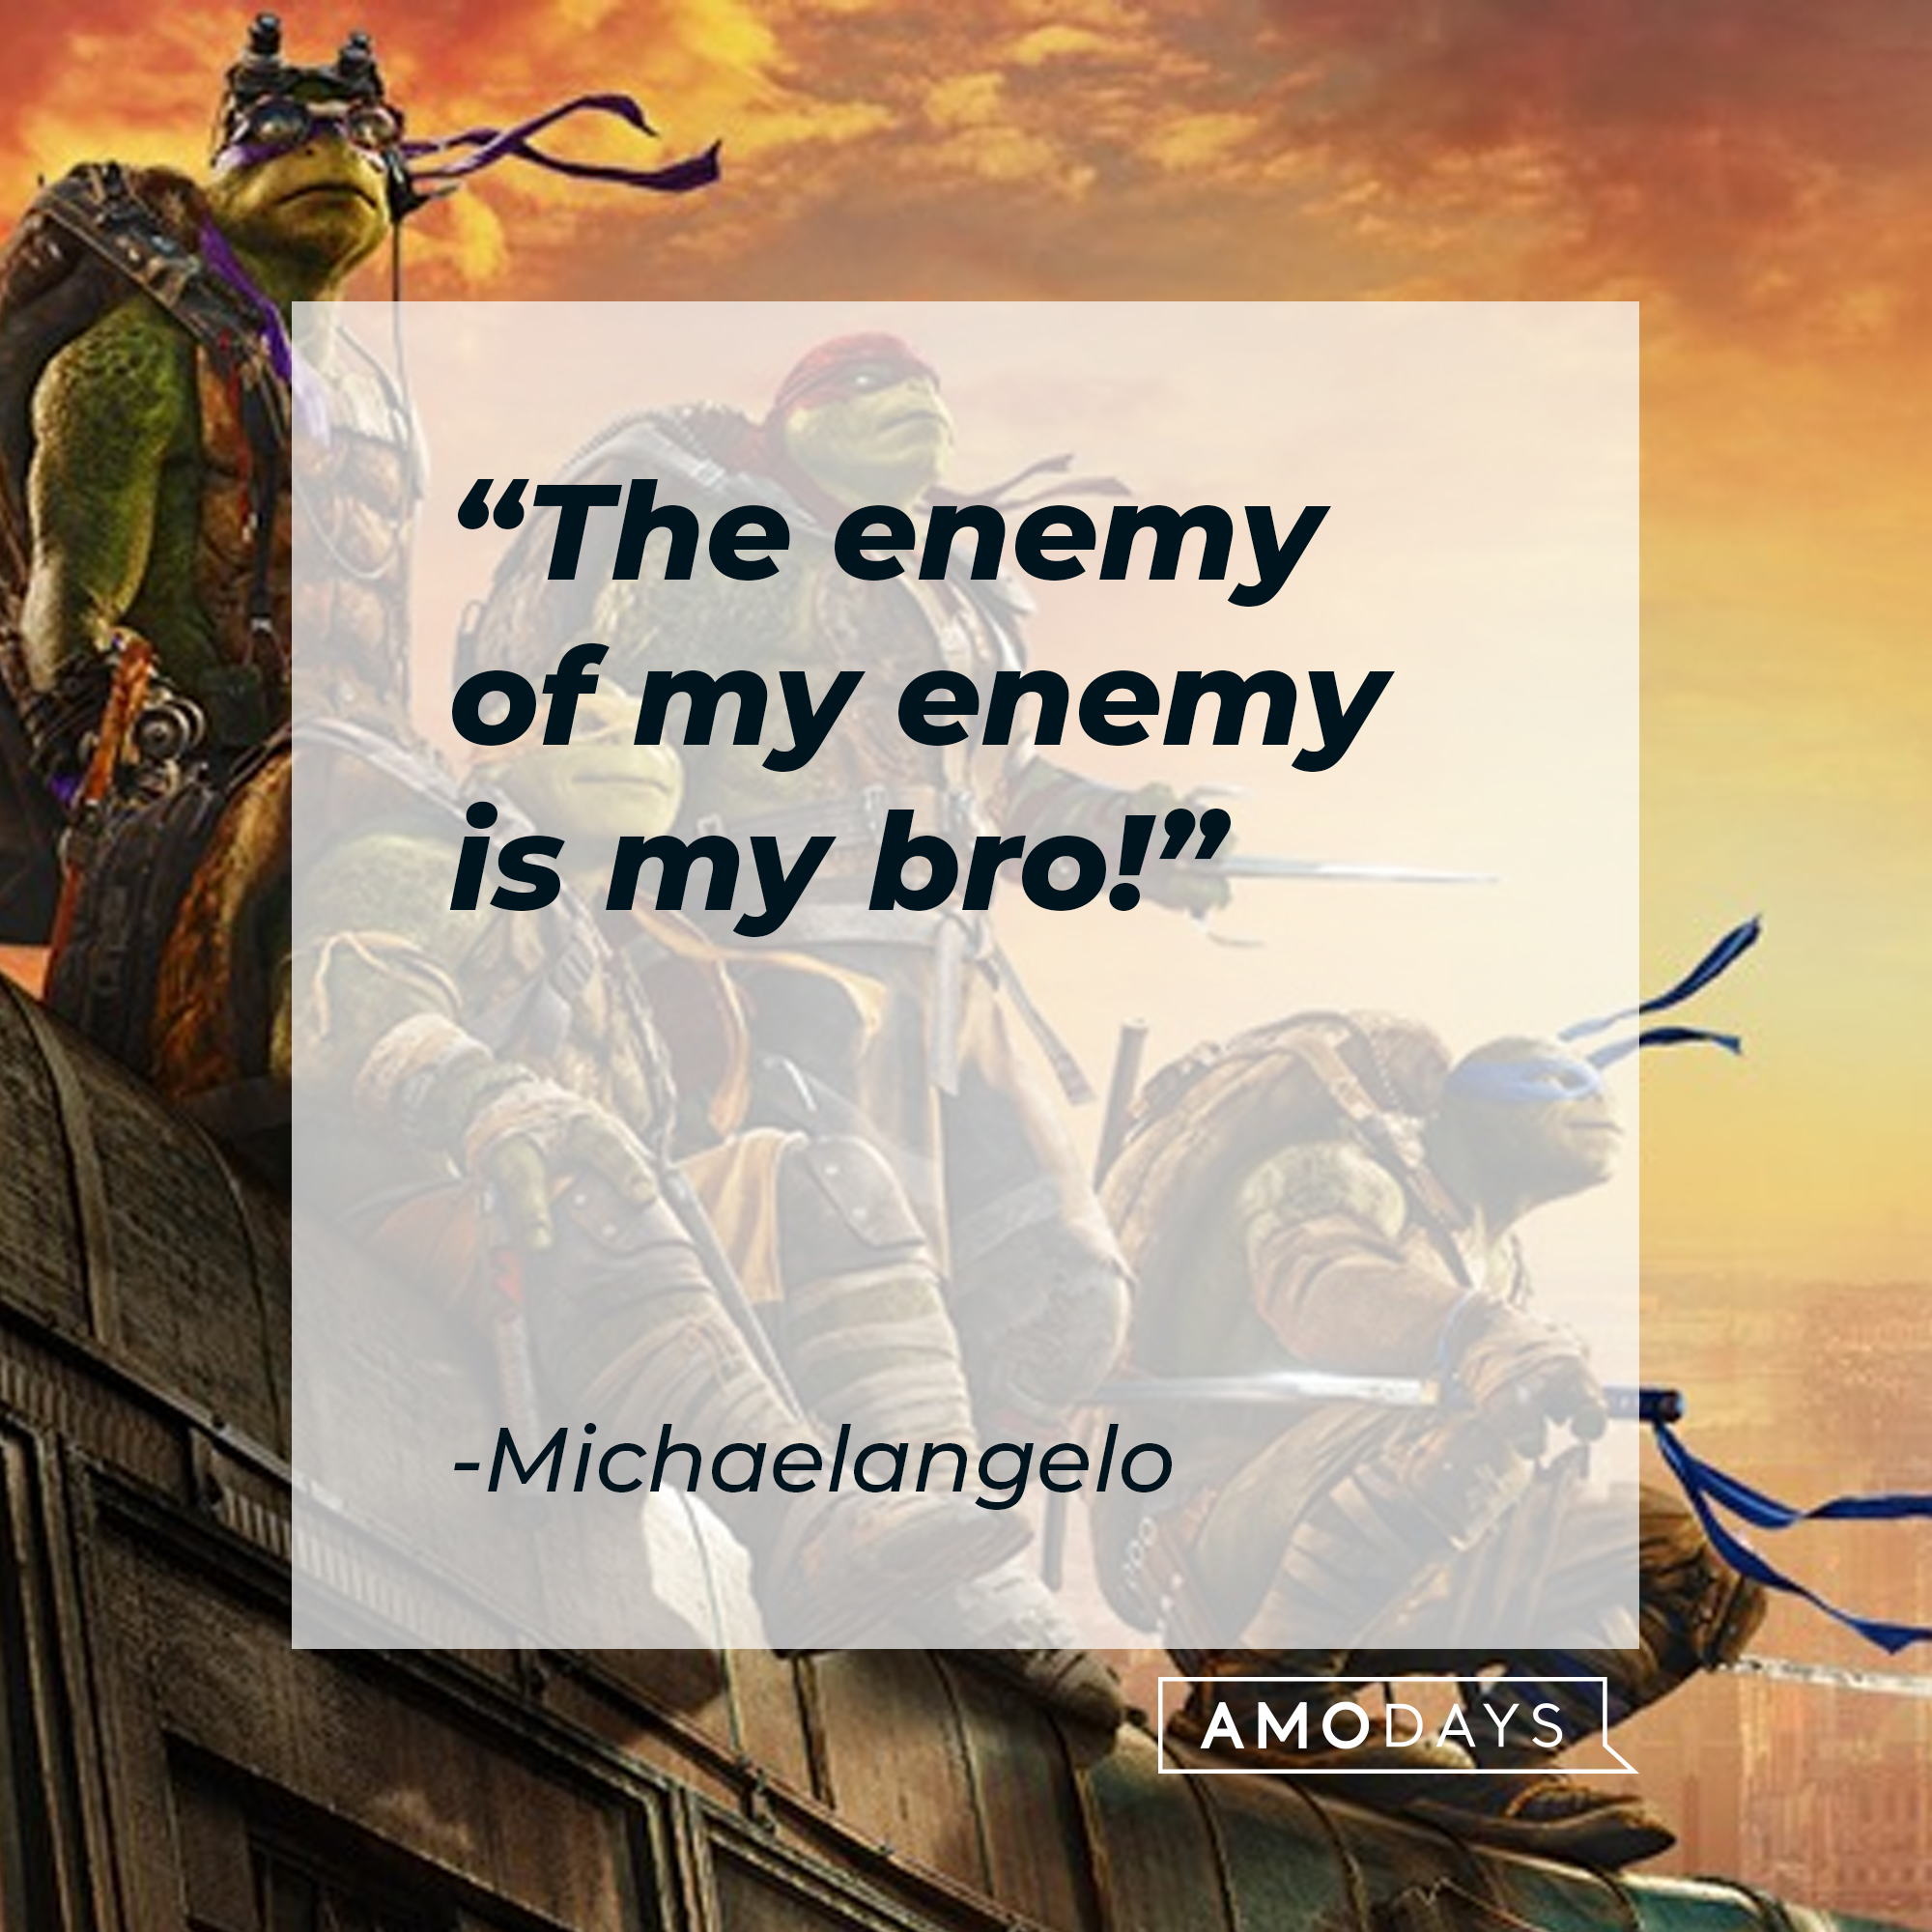 Michaelangelo's quote: "The enemy of my enemy is my bro!" | Source: facebook.com/TMNT